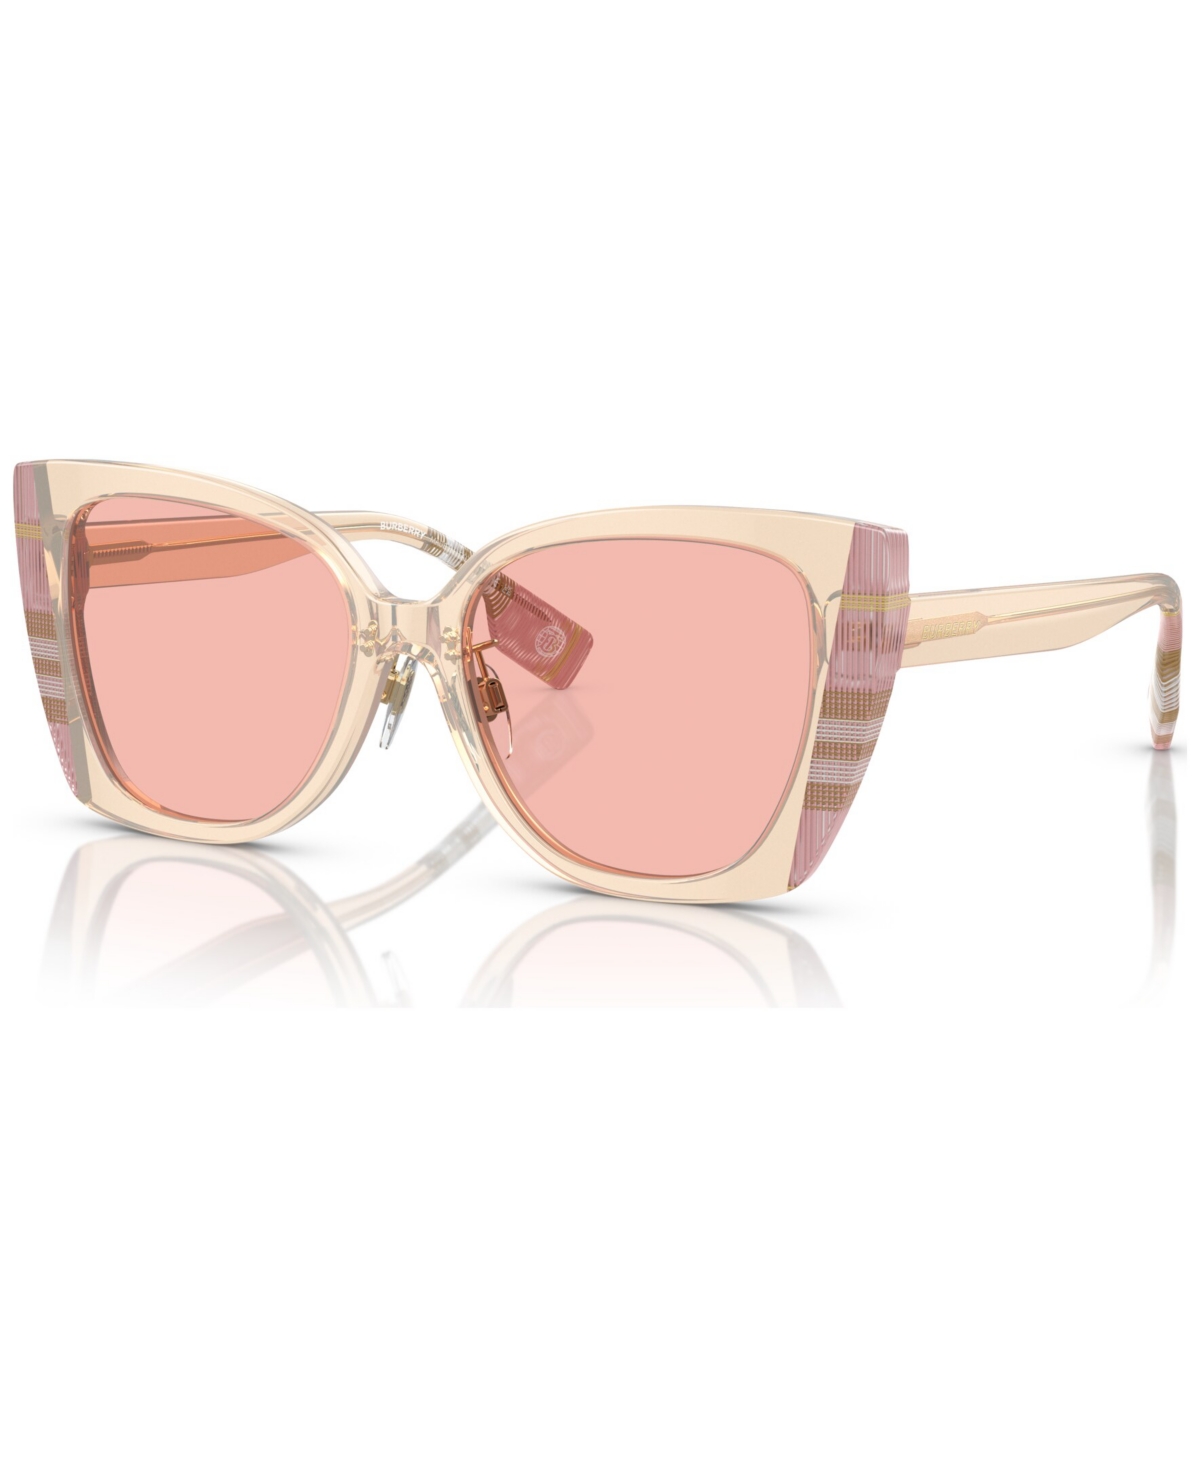 Burberry Women's Low Bridge Fit Sunglasses, Meryl In Pink